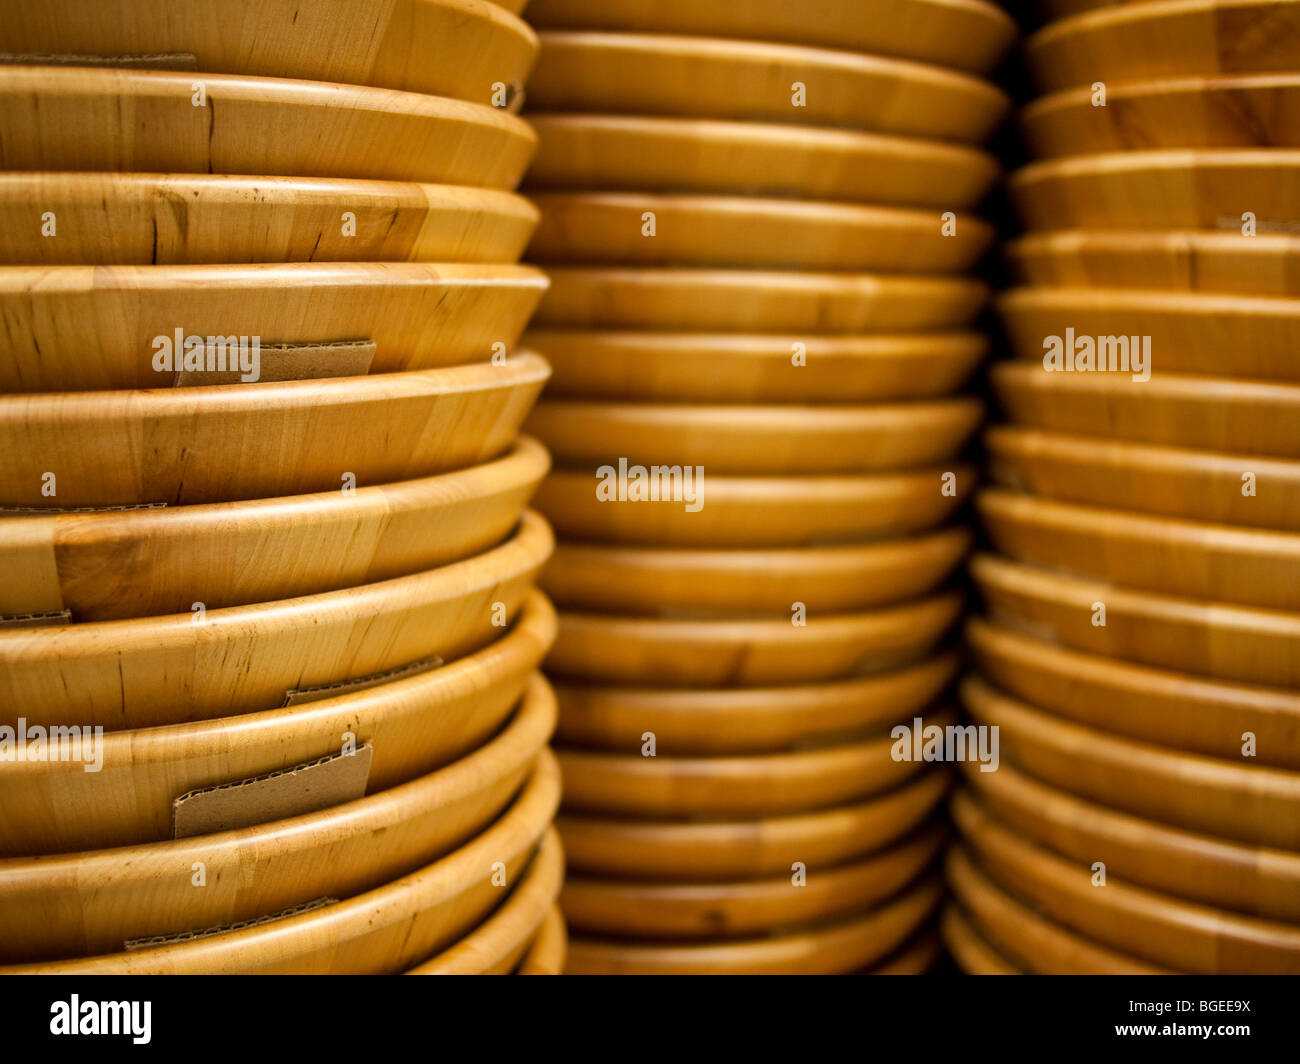 Wooden Bowls, IKEA Stock Photo - Alamy